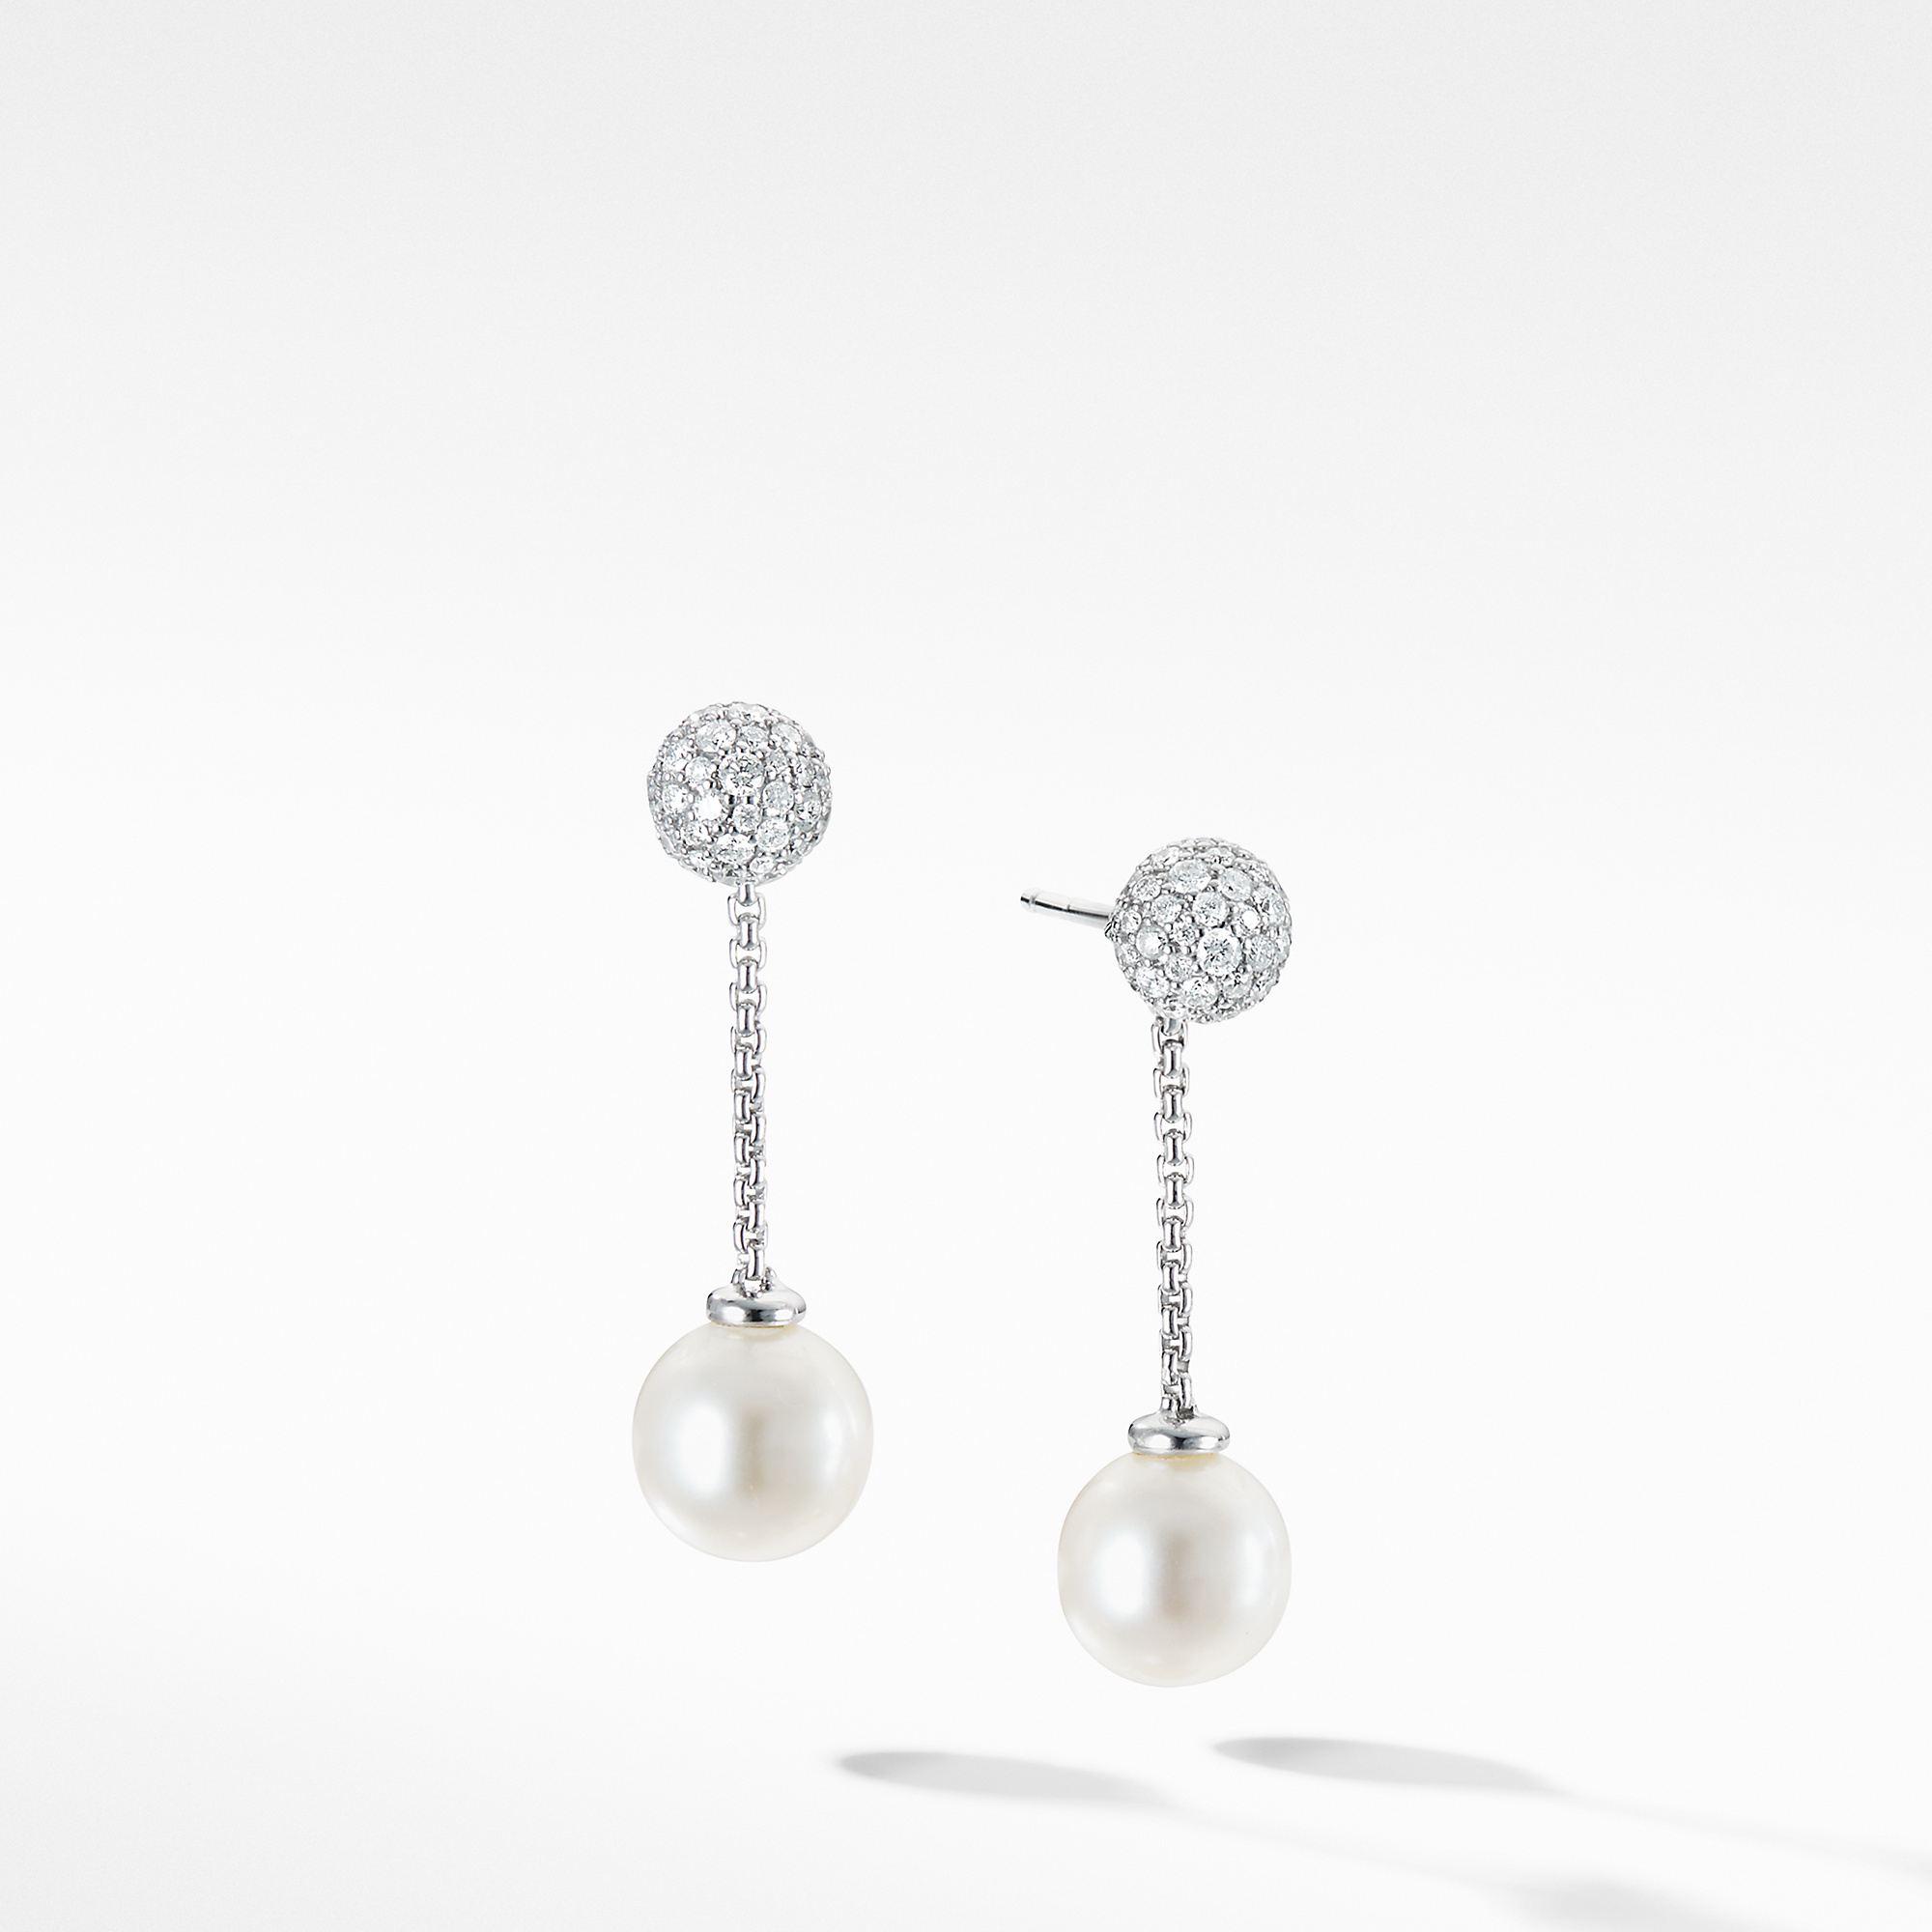 David Yurman Solari Chain Drop Earring in 18k White Gold with Pearls and Diamonds